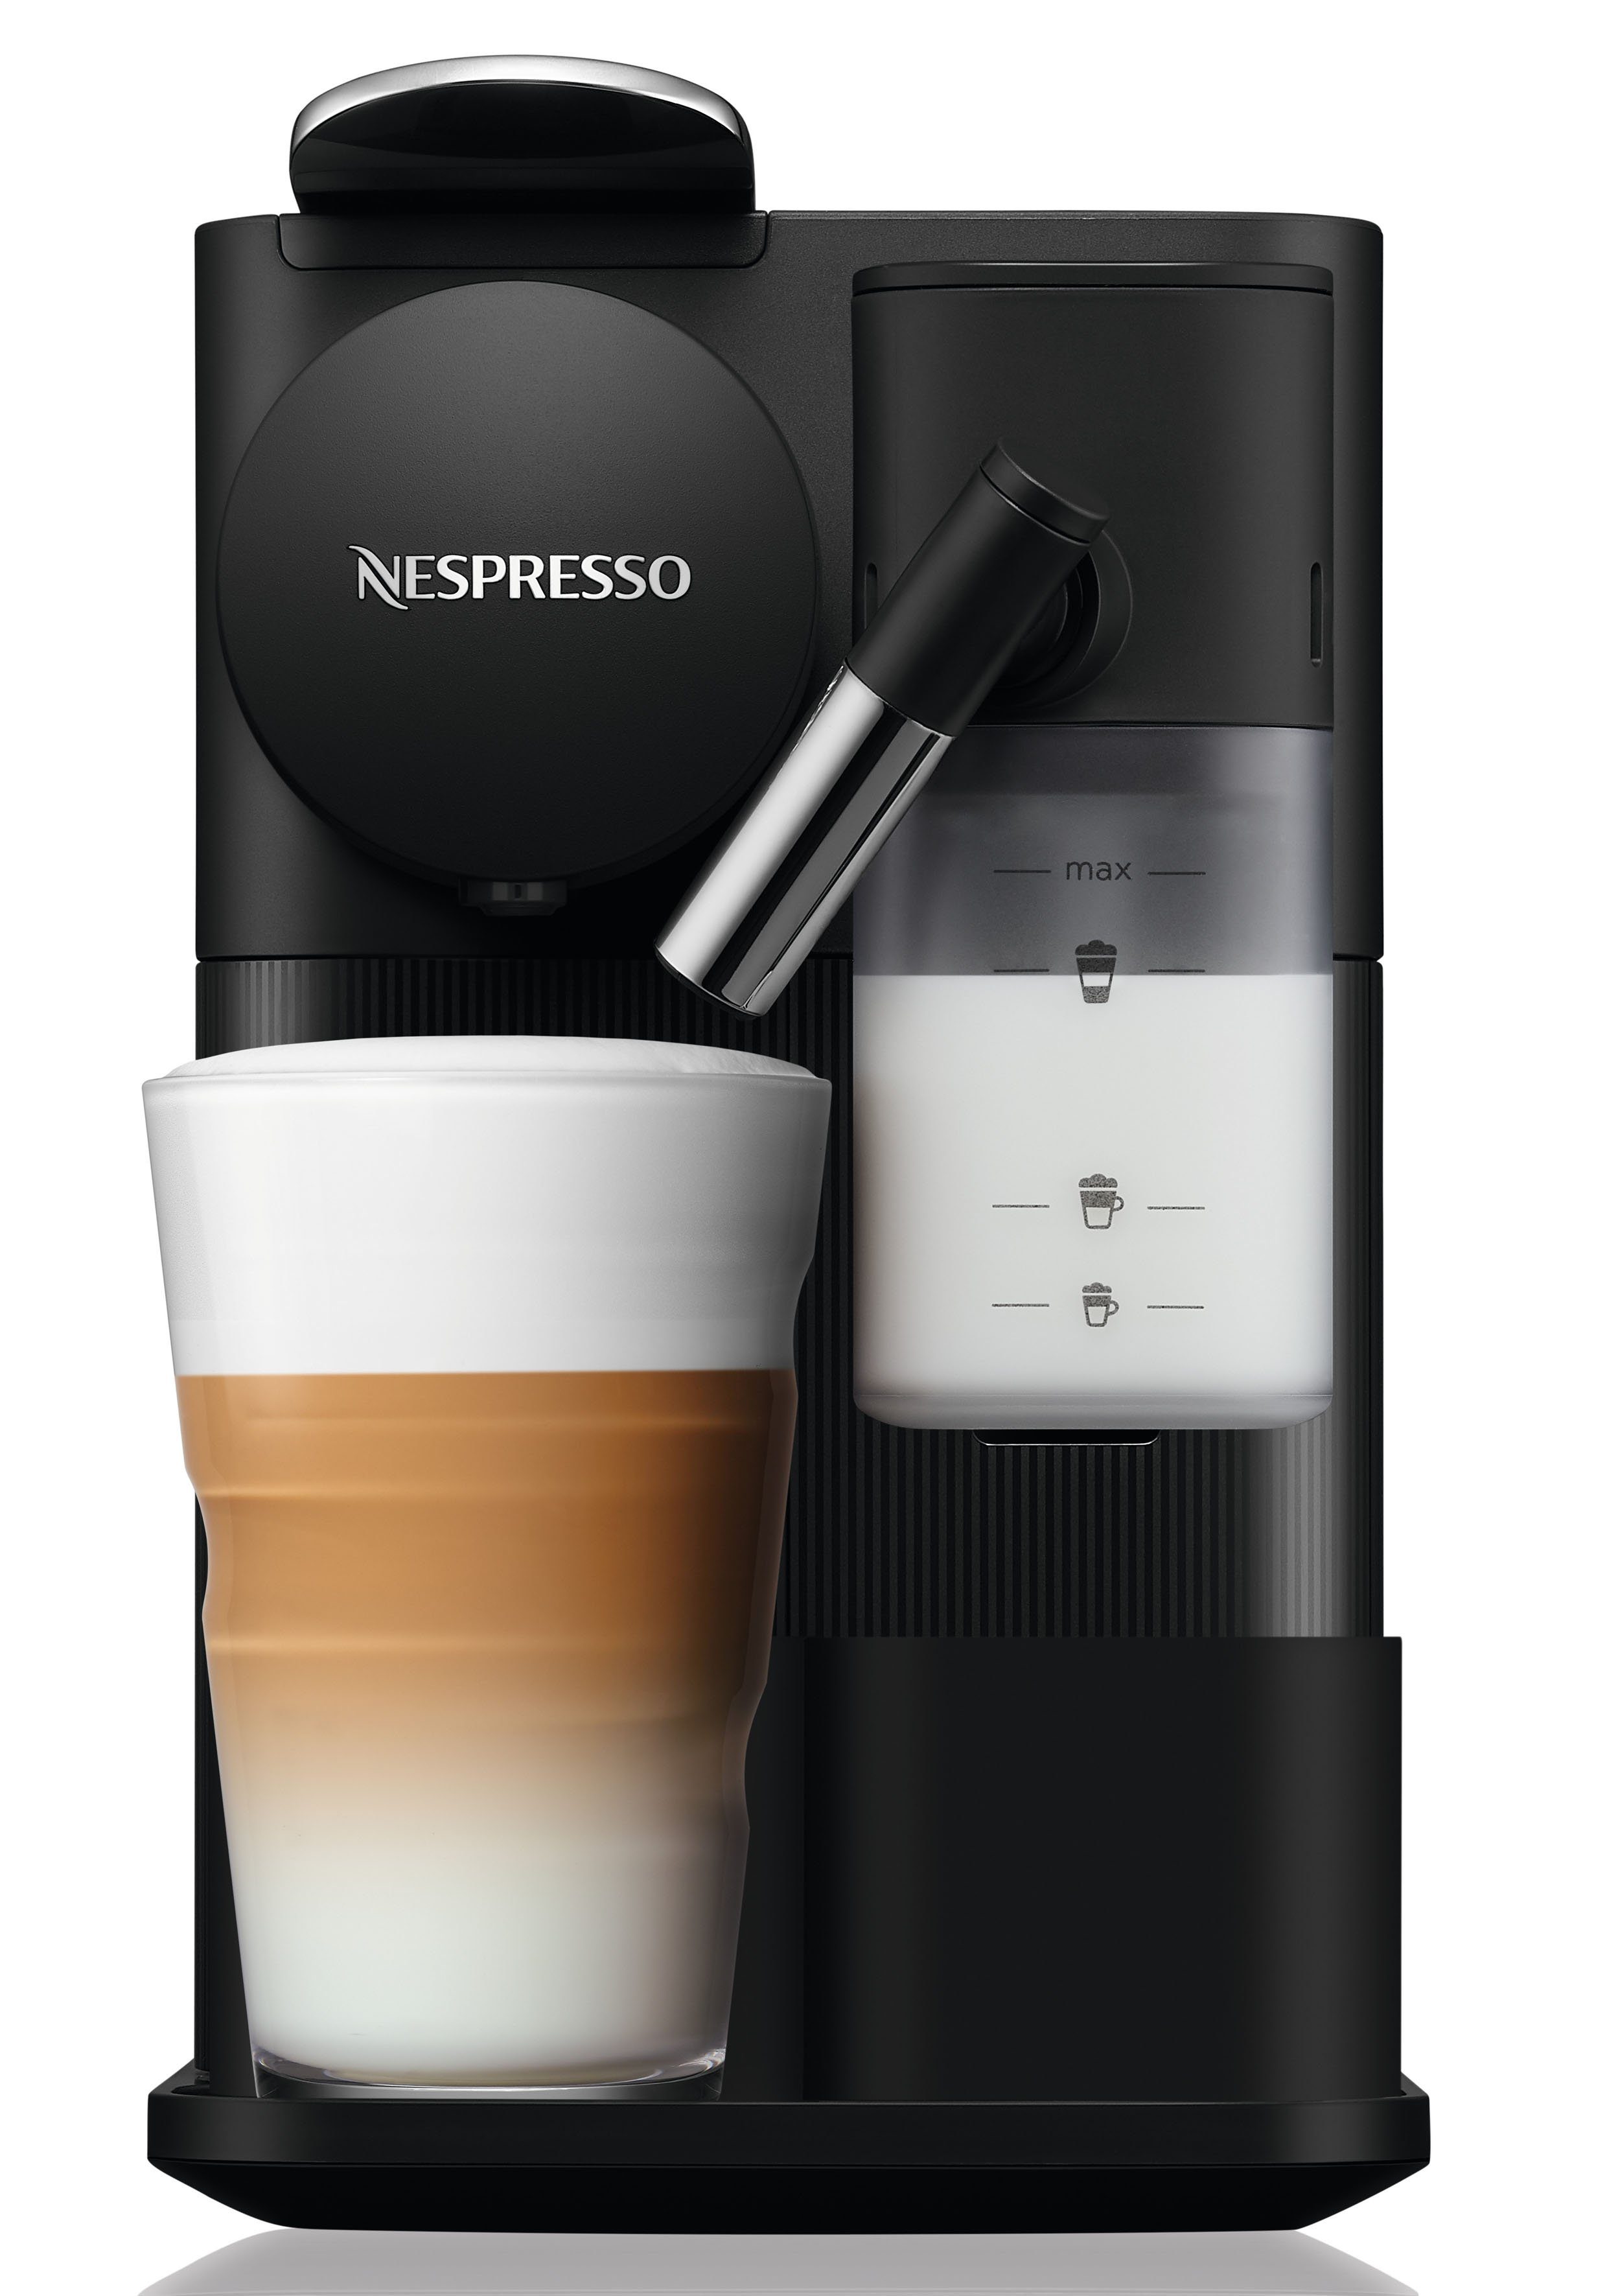 inkl. Willkommenspaket mit DeLonghi, Lattissima Black, Kapselmaschine EN510.B One von Nespresso Kapseln 7